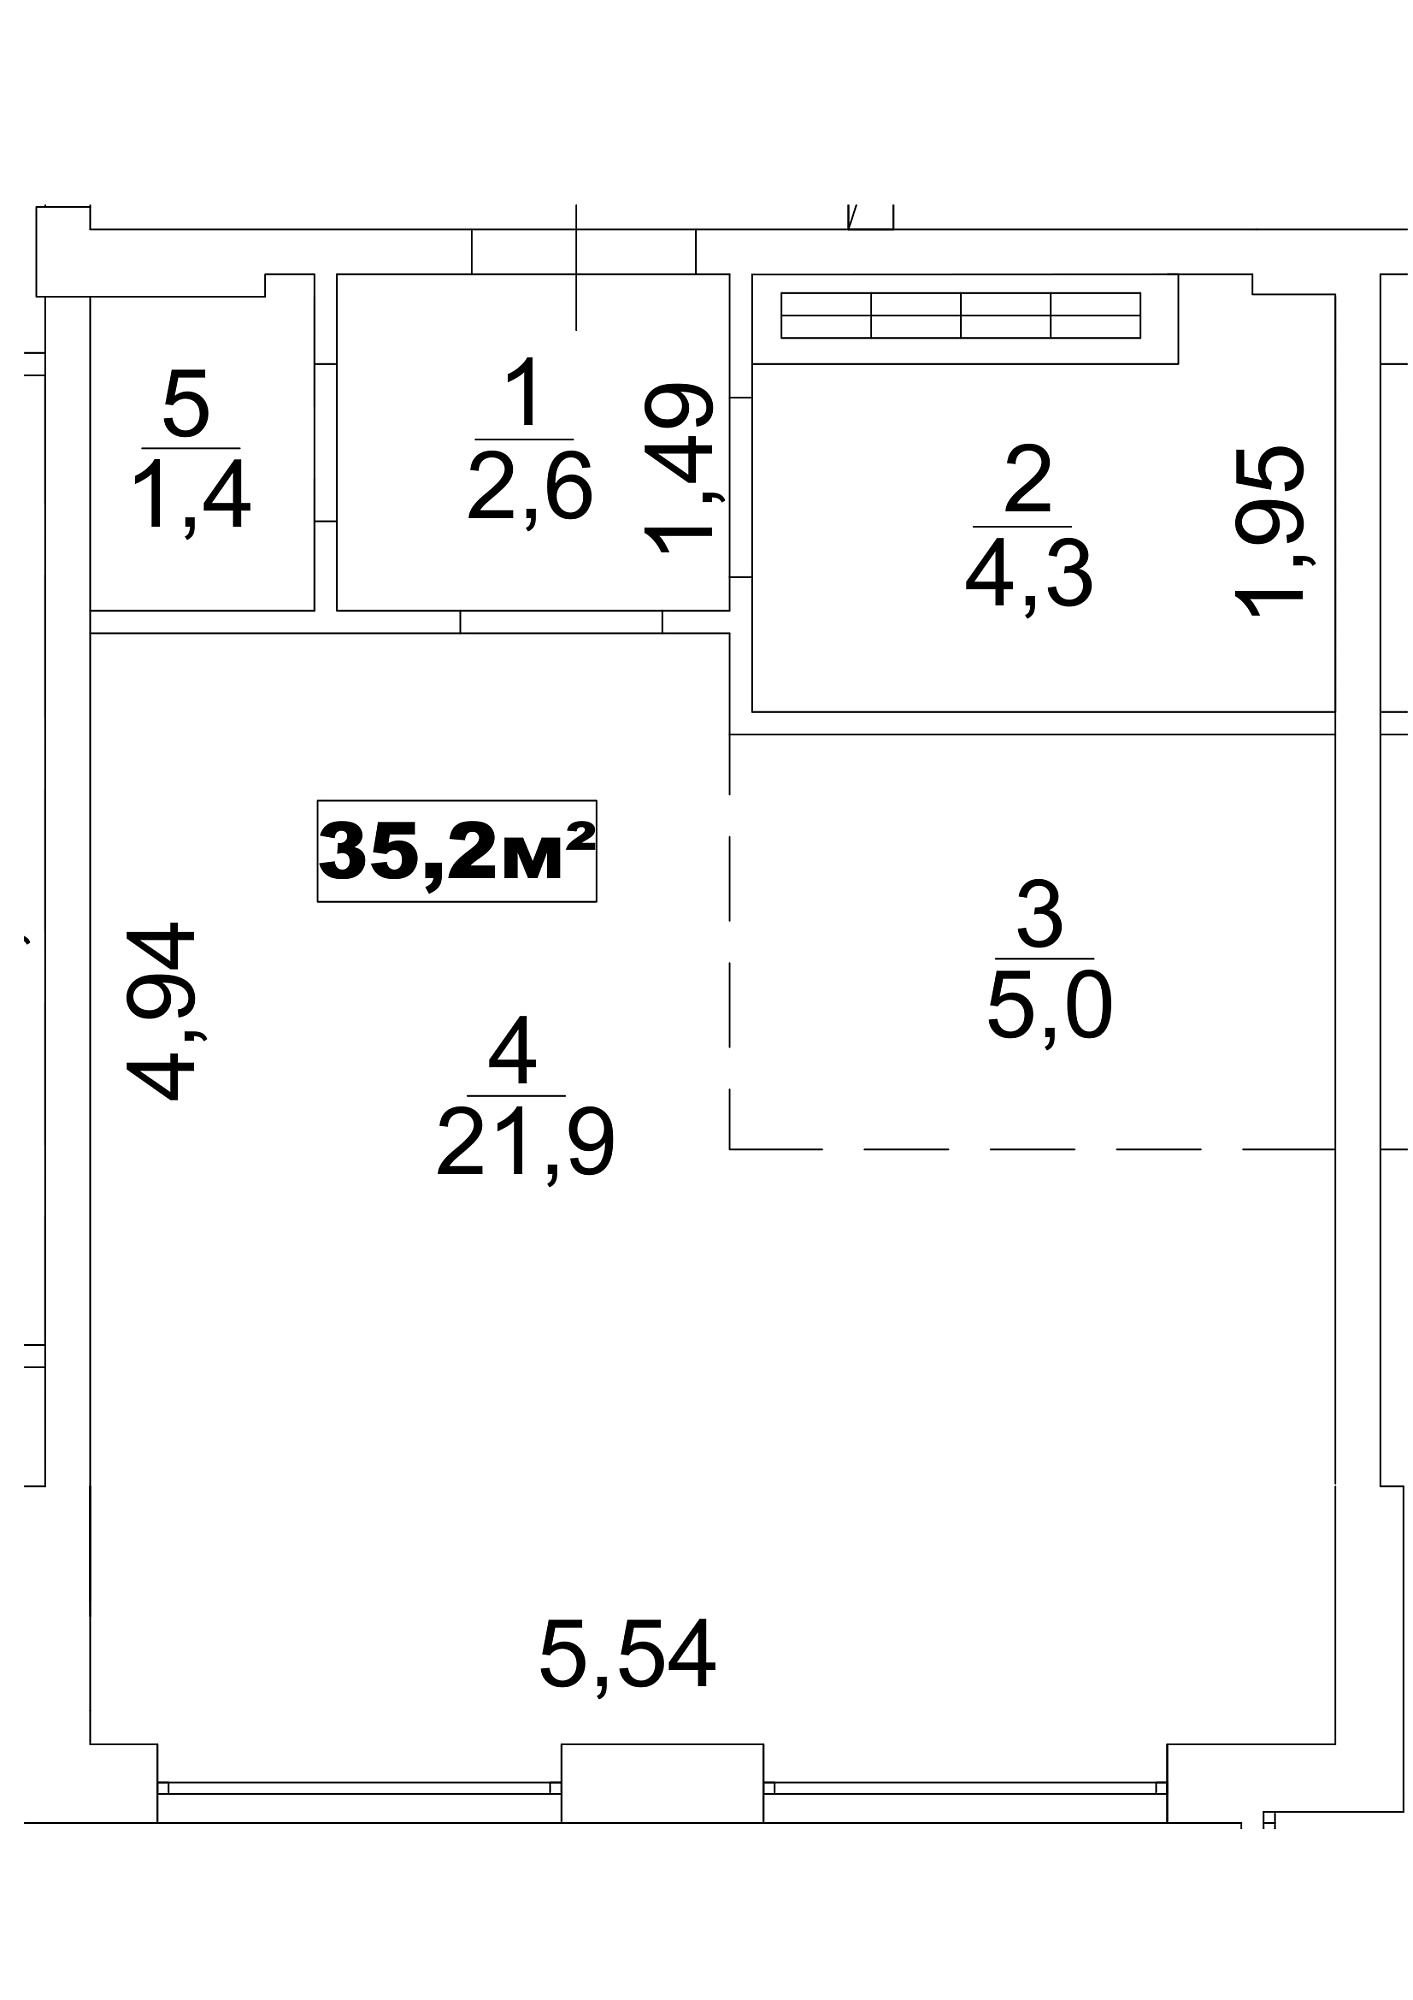 Planning Smart flats area 35.2m2, AB-13-06/00044.